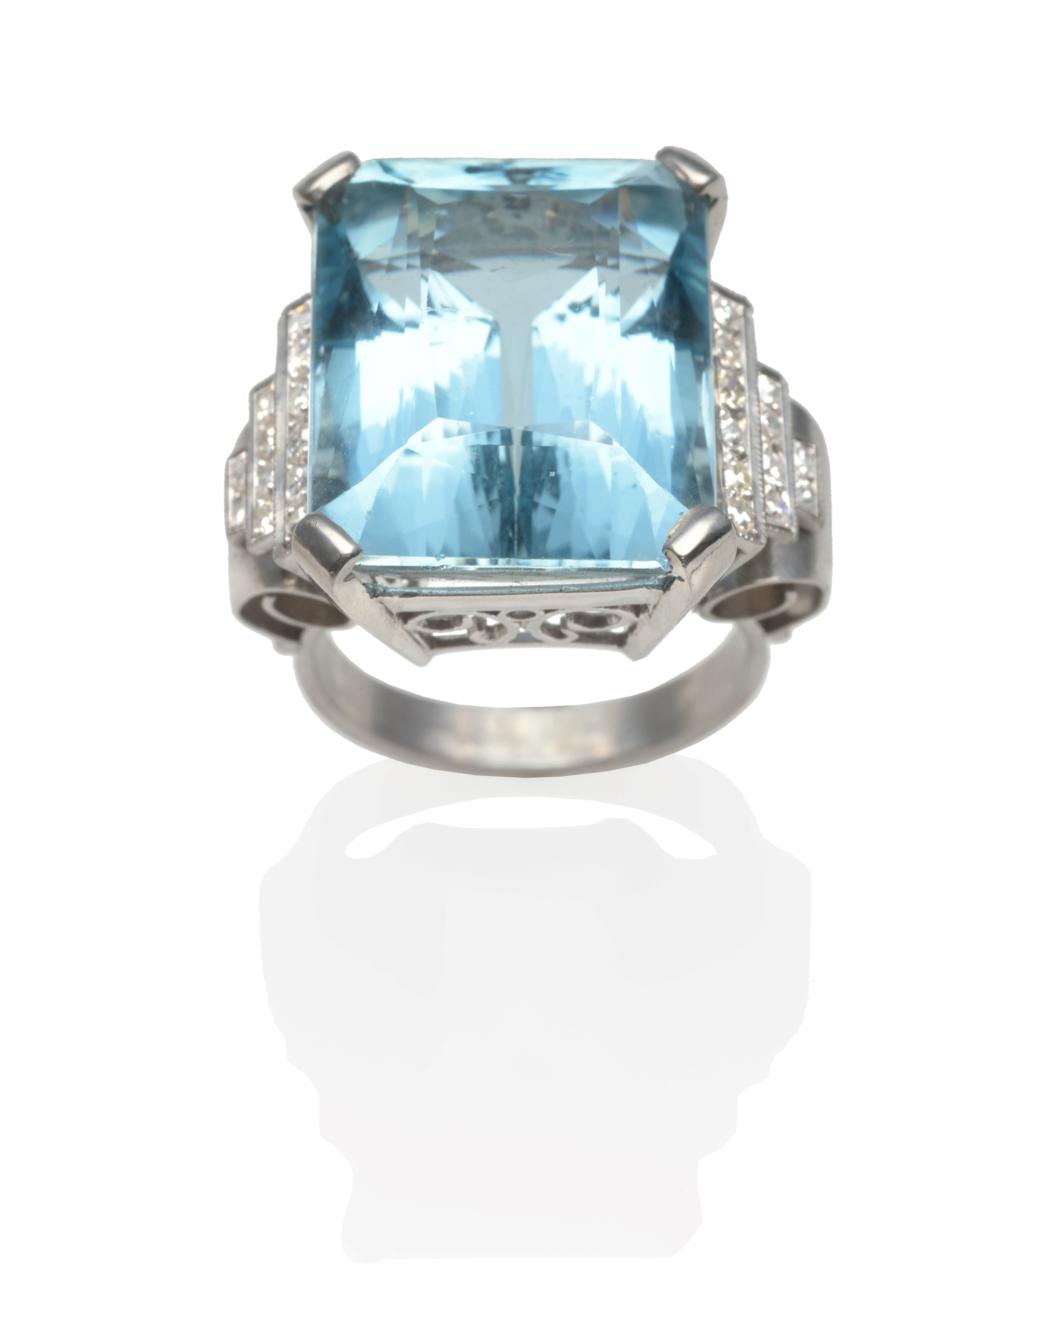 An Art Deco Aquamarine and Diamond Ring, an emerald-cut aquamarine in a white claw setting and set